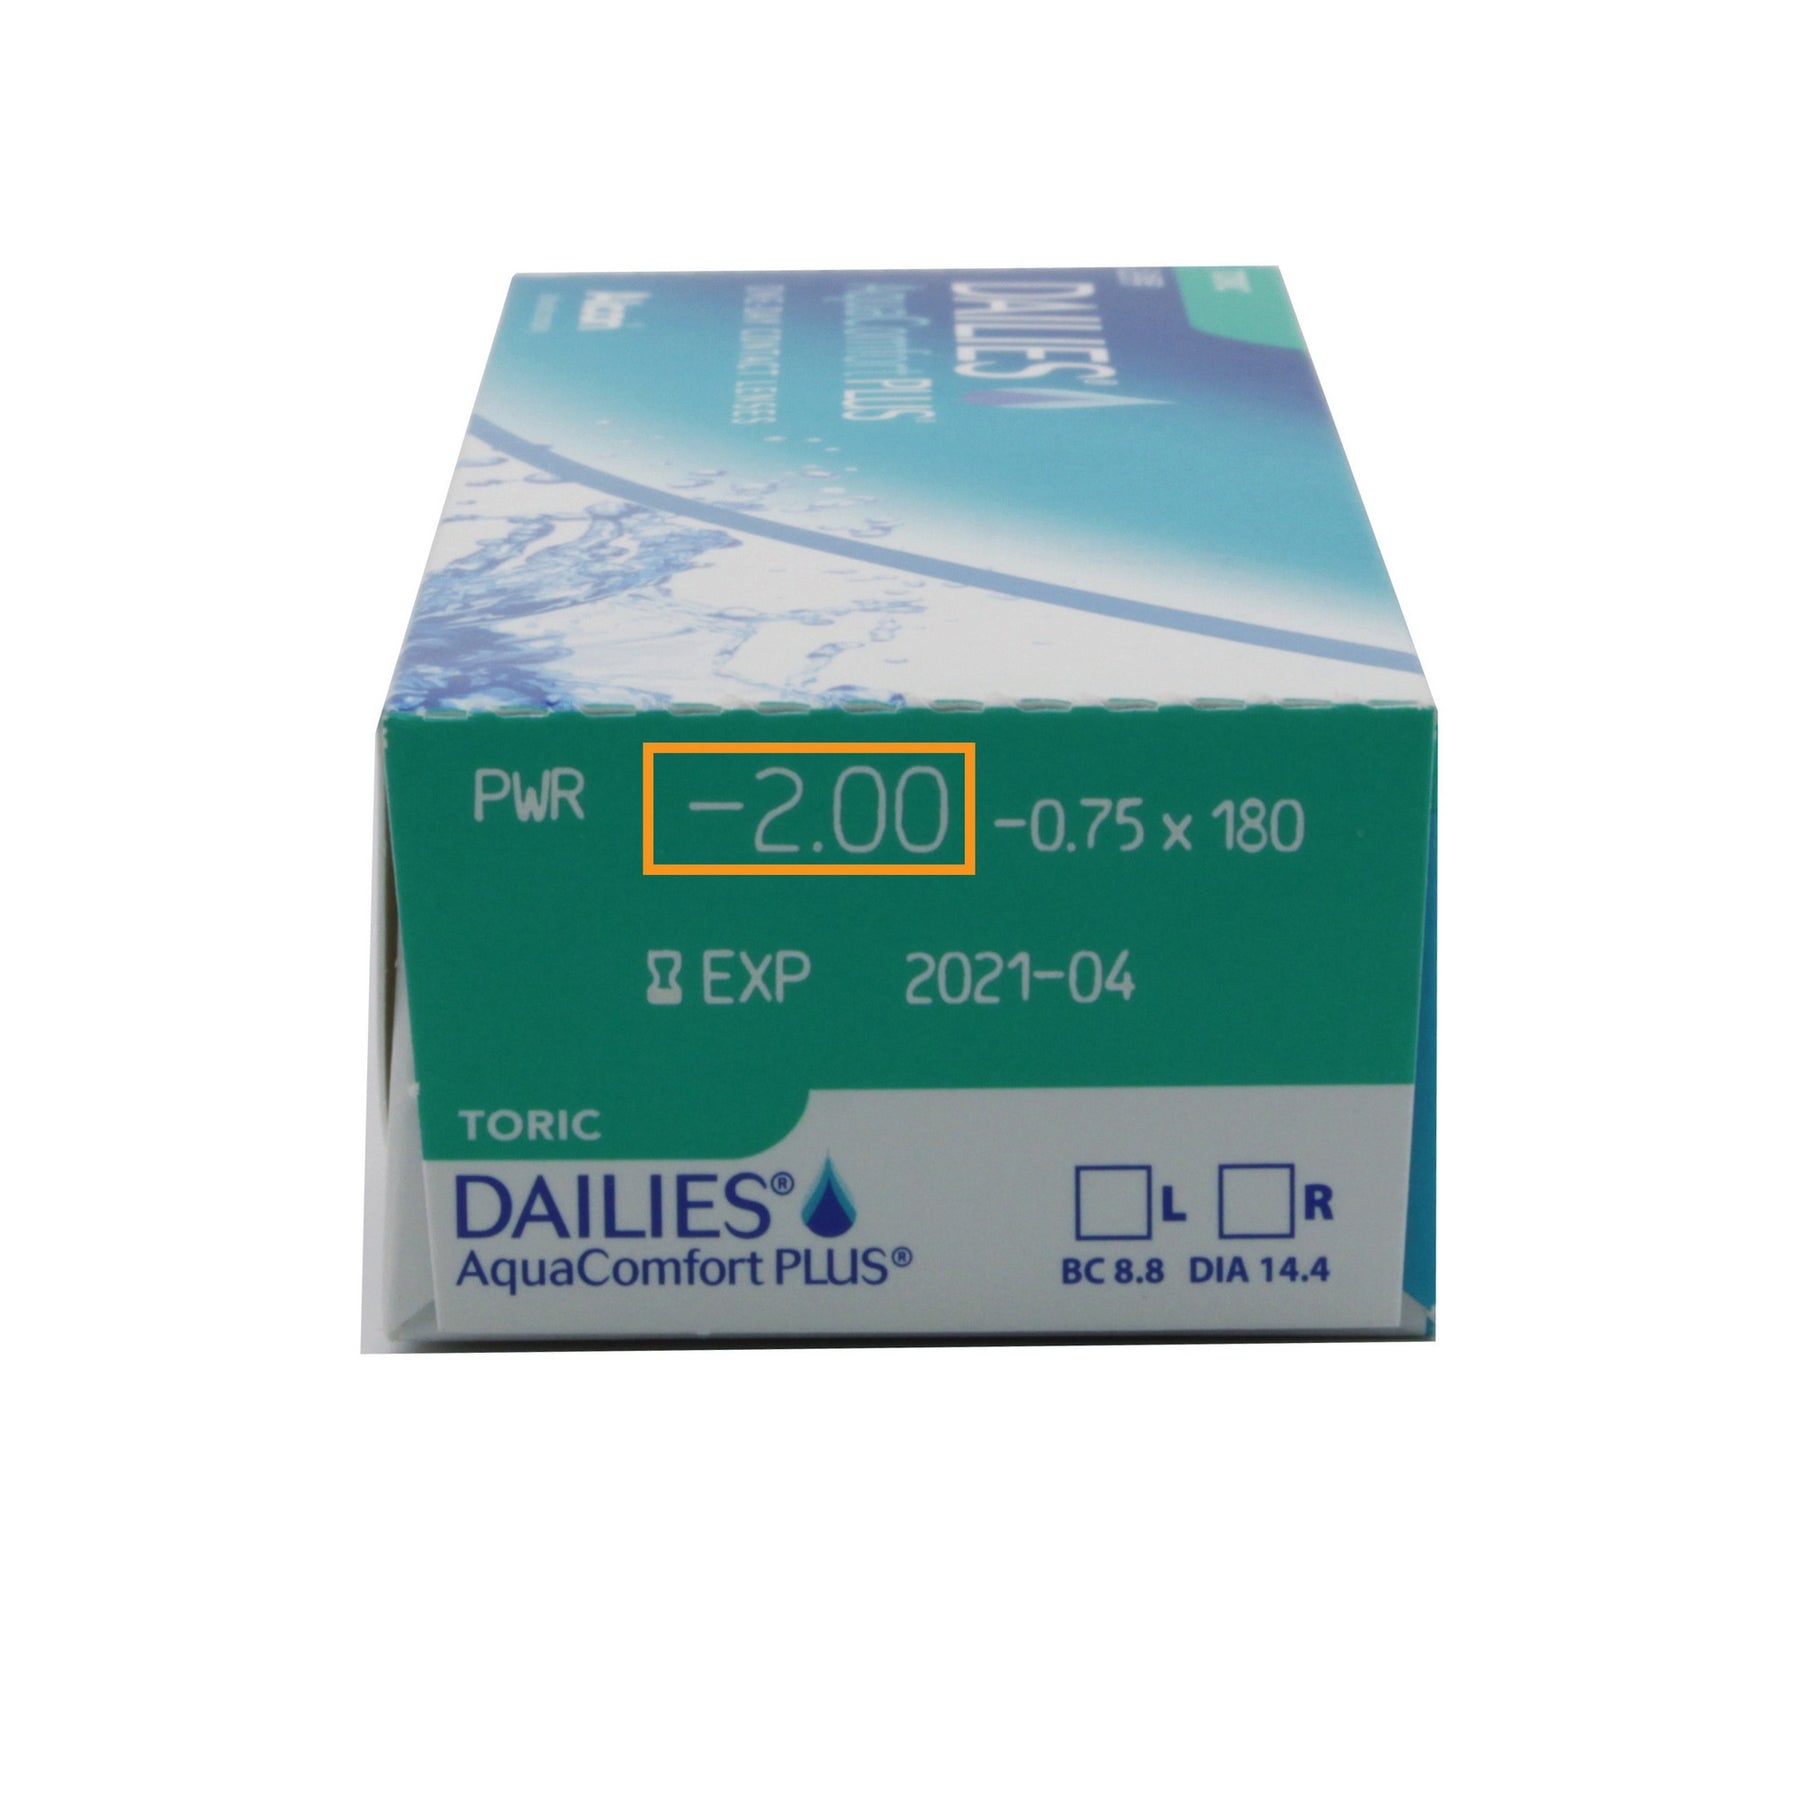 ALCON Dalies AquaComfort Plus Toric Daily Disposable Contact Lenses